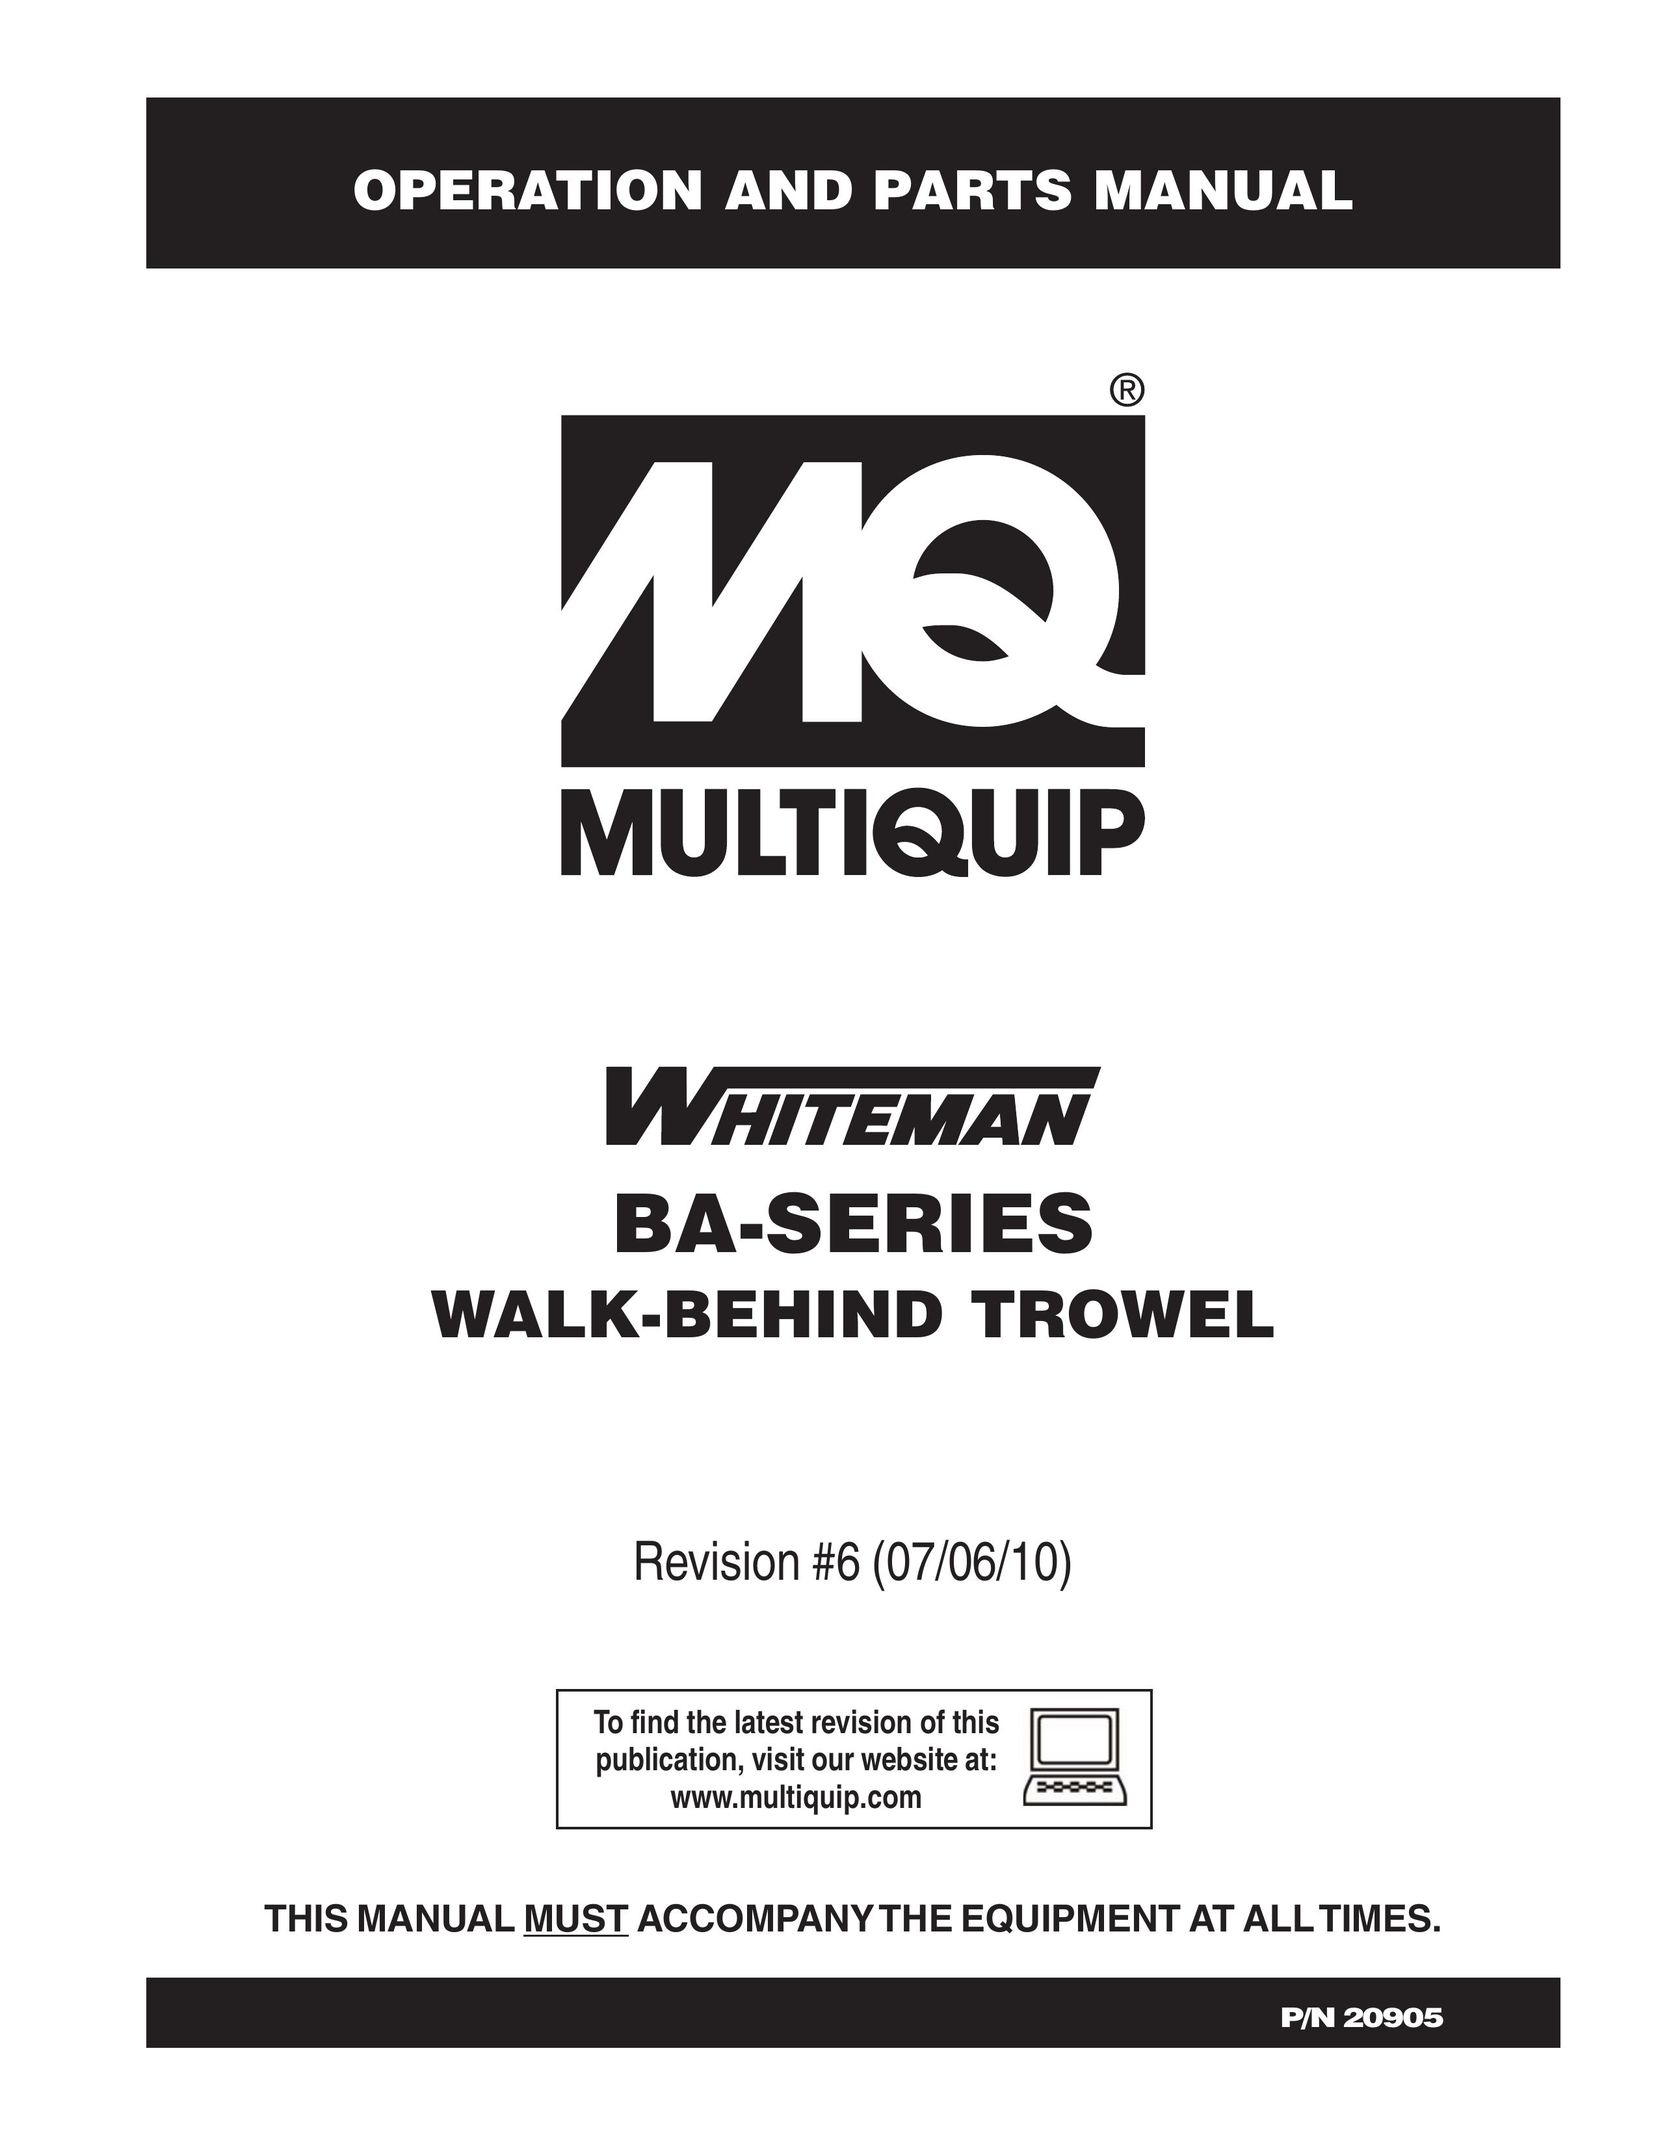 Multiquip BA Model Vehicle User Manual